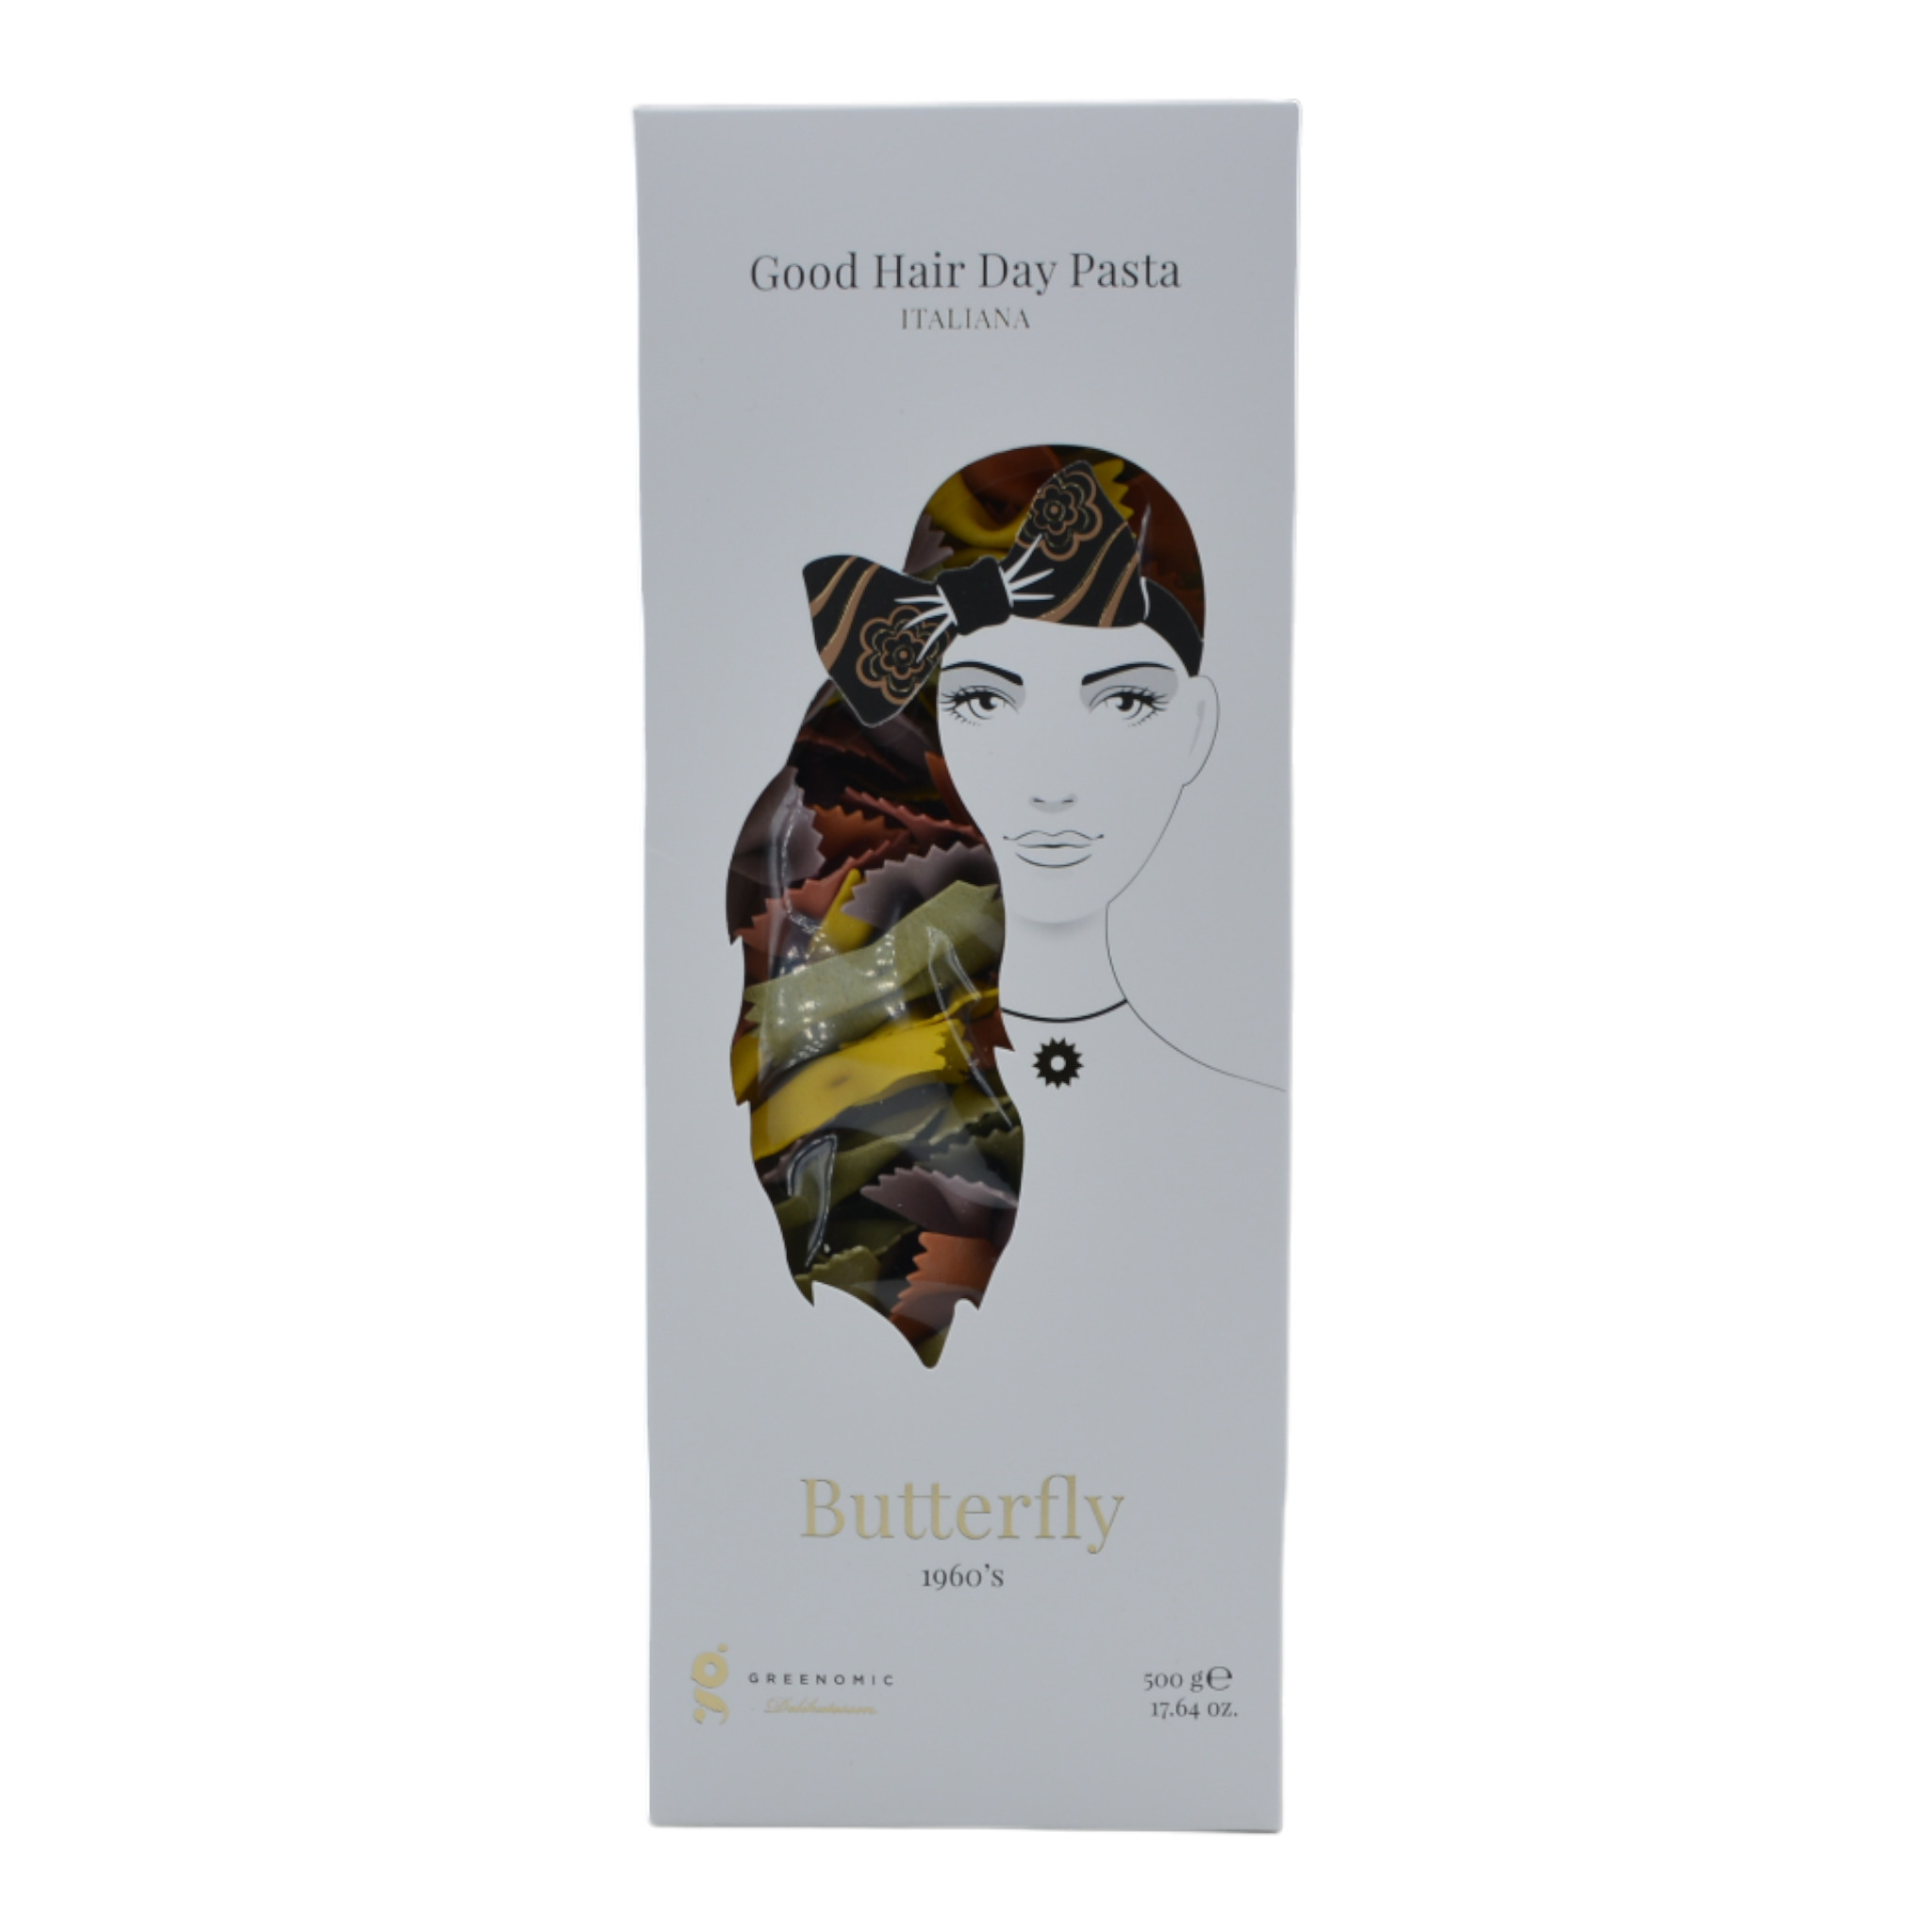 4260328815663 - Greenomic Delikatessen Good Hair Day Pasta Butterfly 1960s f